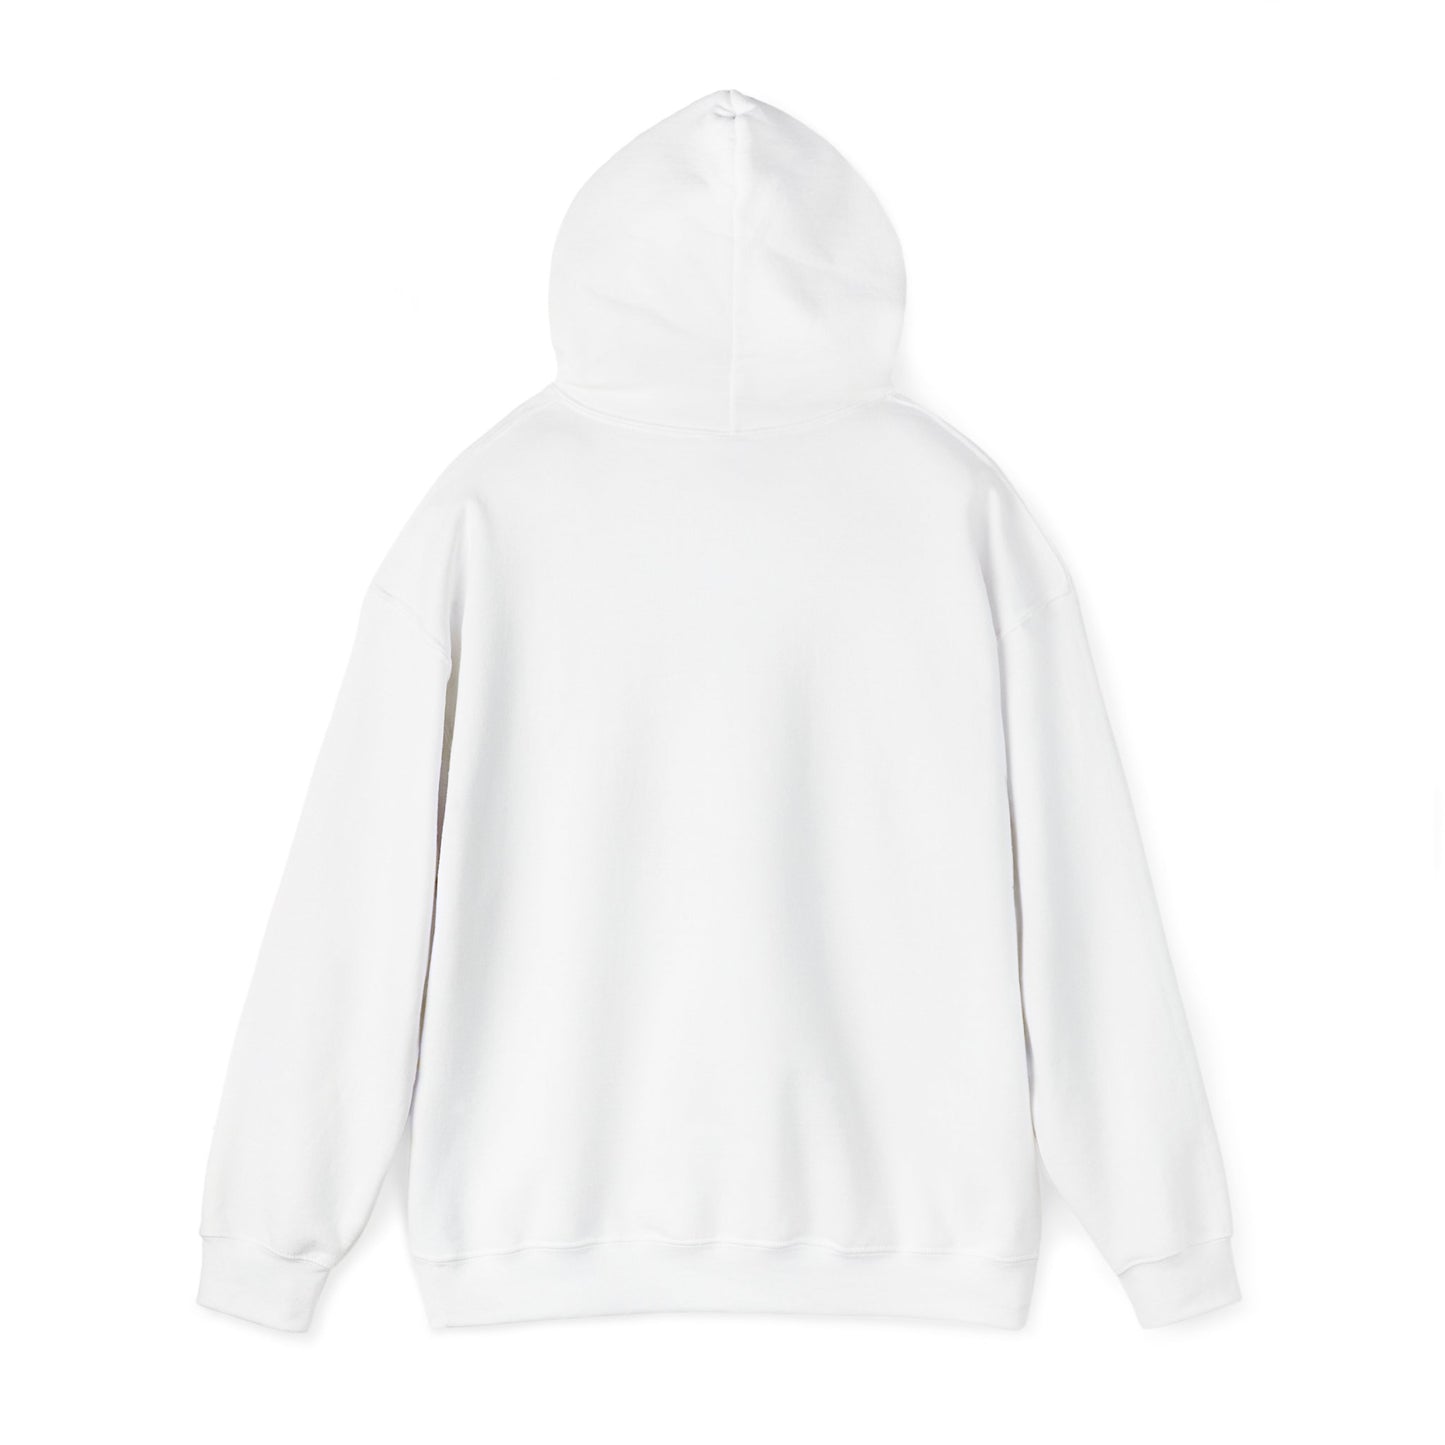 Worl Greatest Mom - Unisex Heavy Blend™ Hooded Sweatshirt